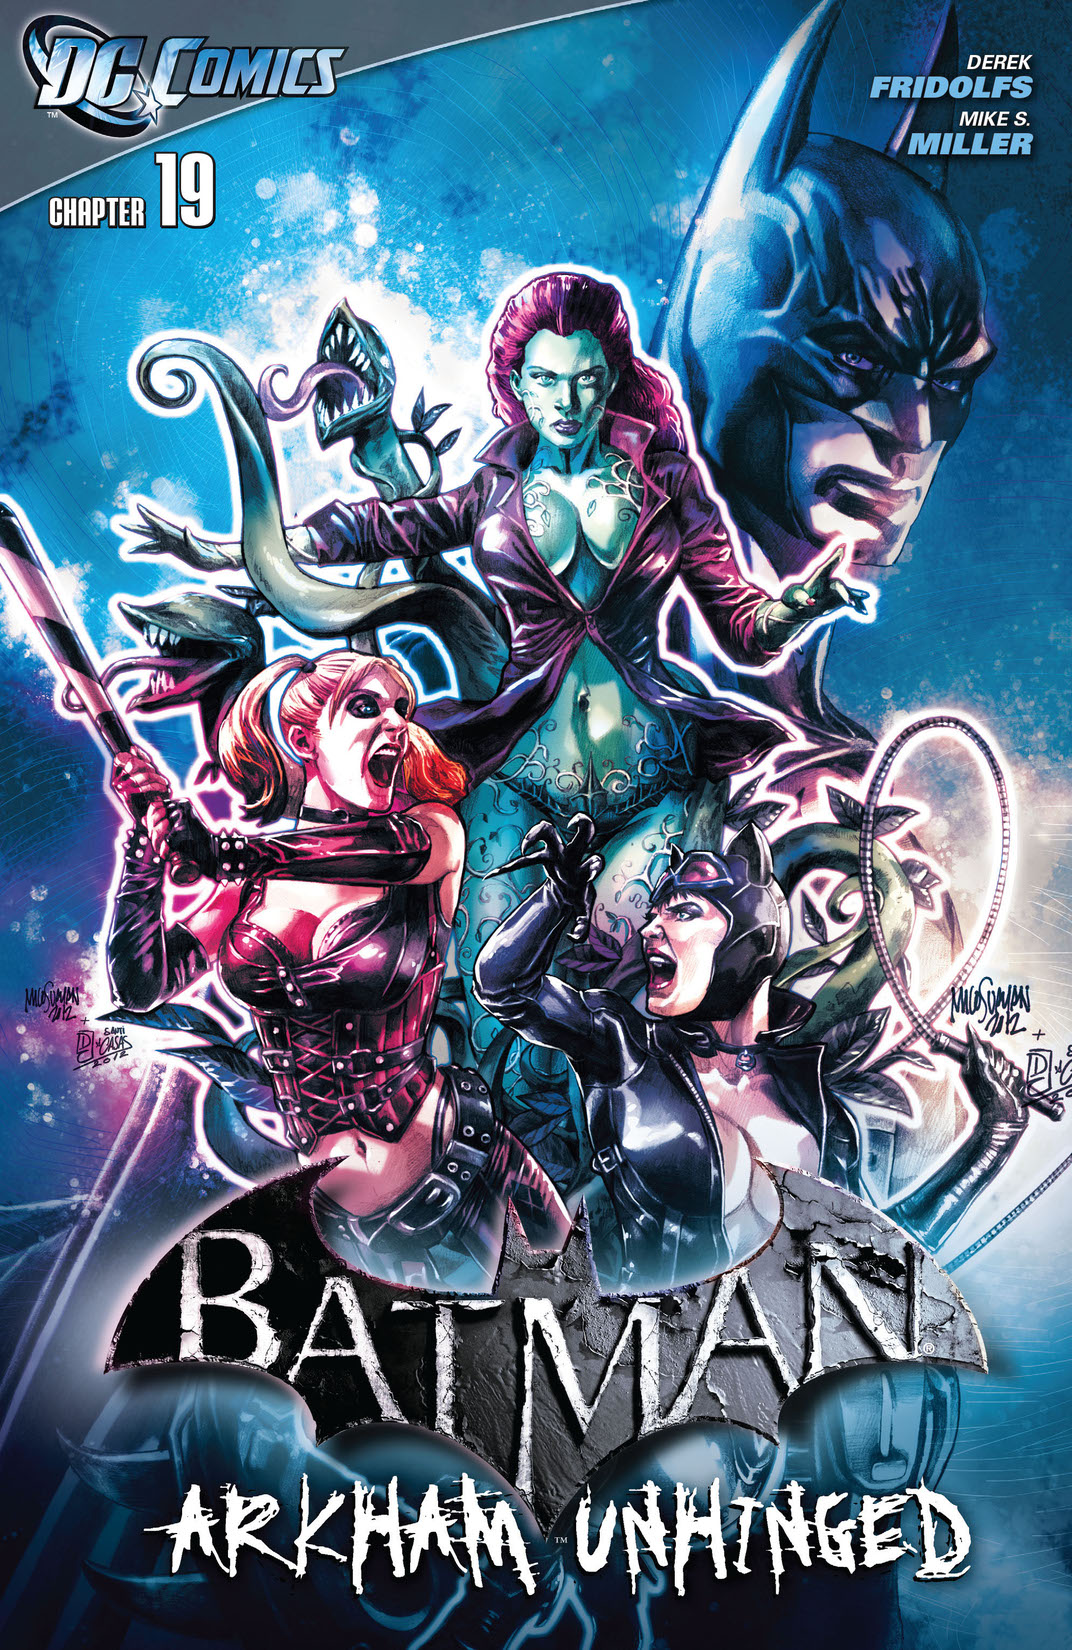 Batman: Arkham Unhinged #19 preview images